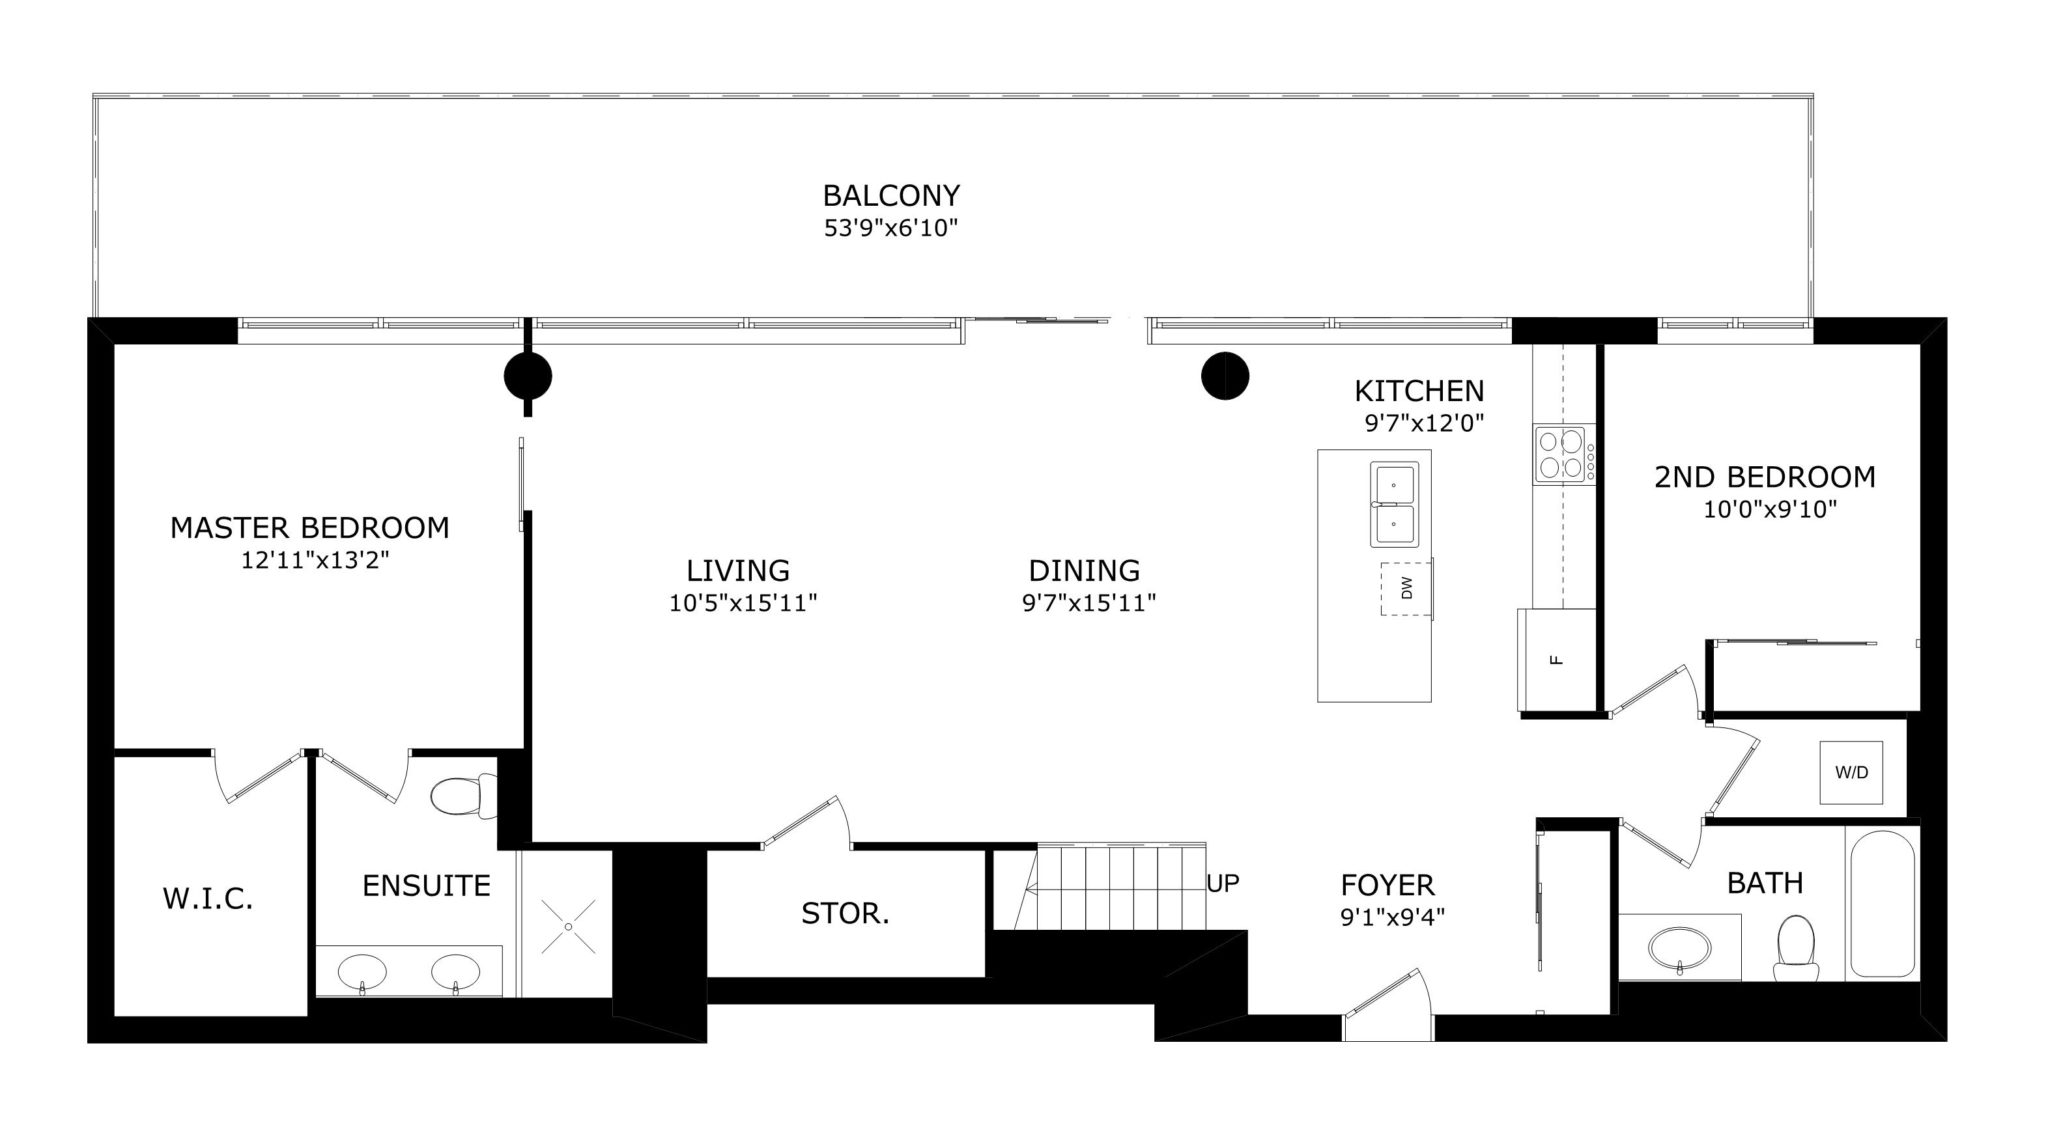 Floor Plan of penthouse condo